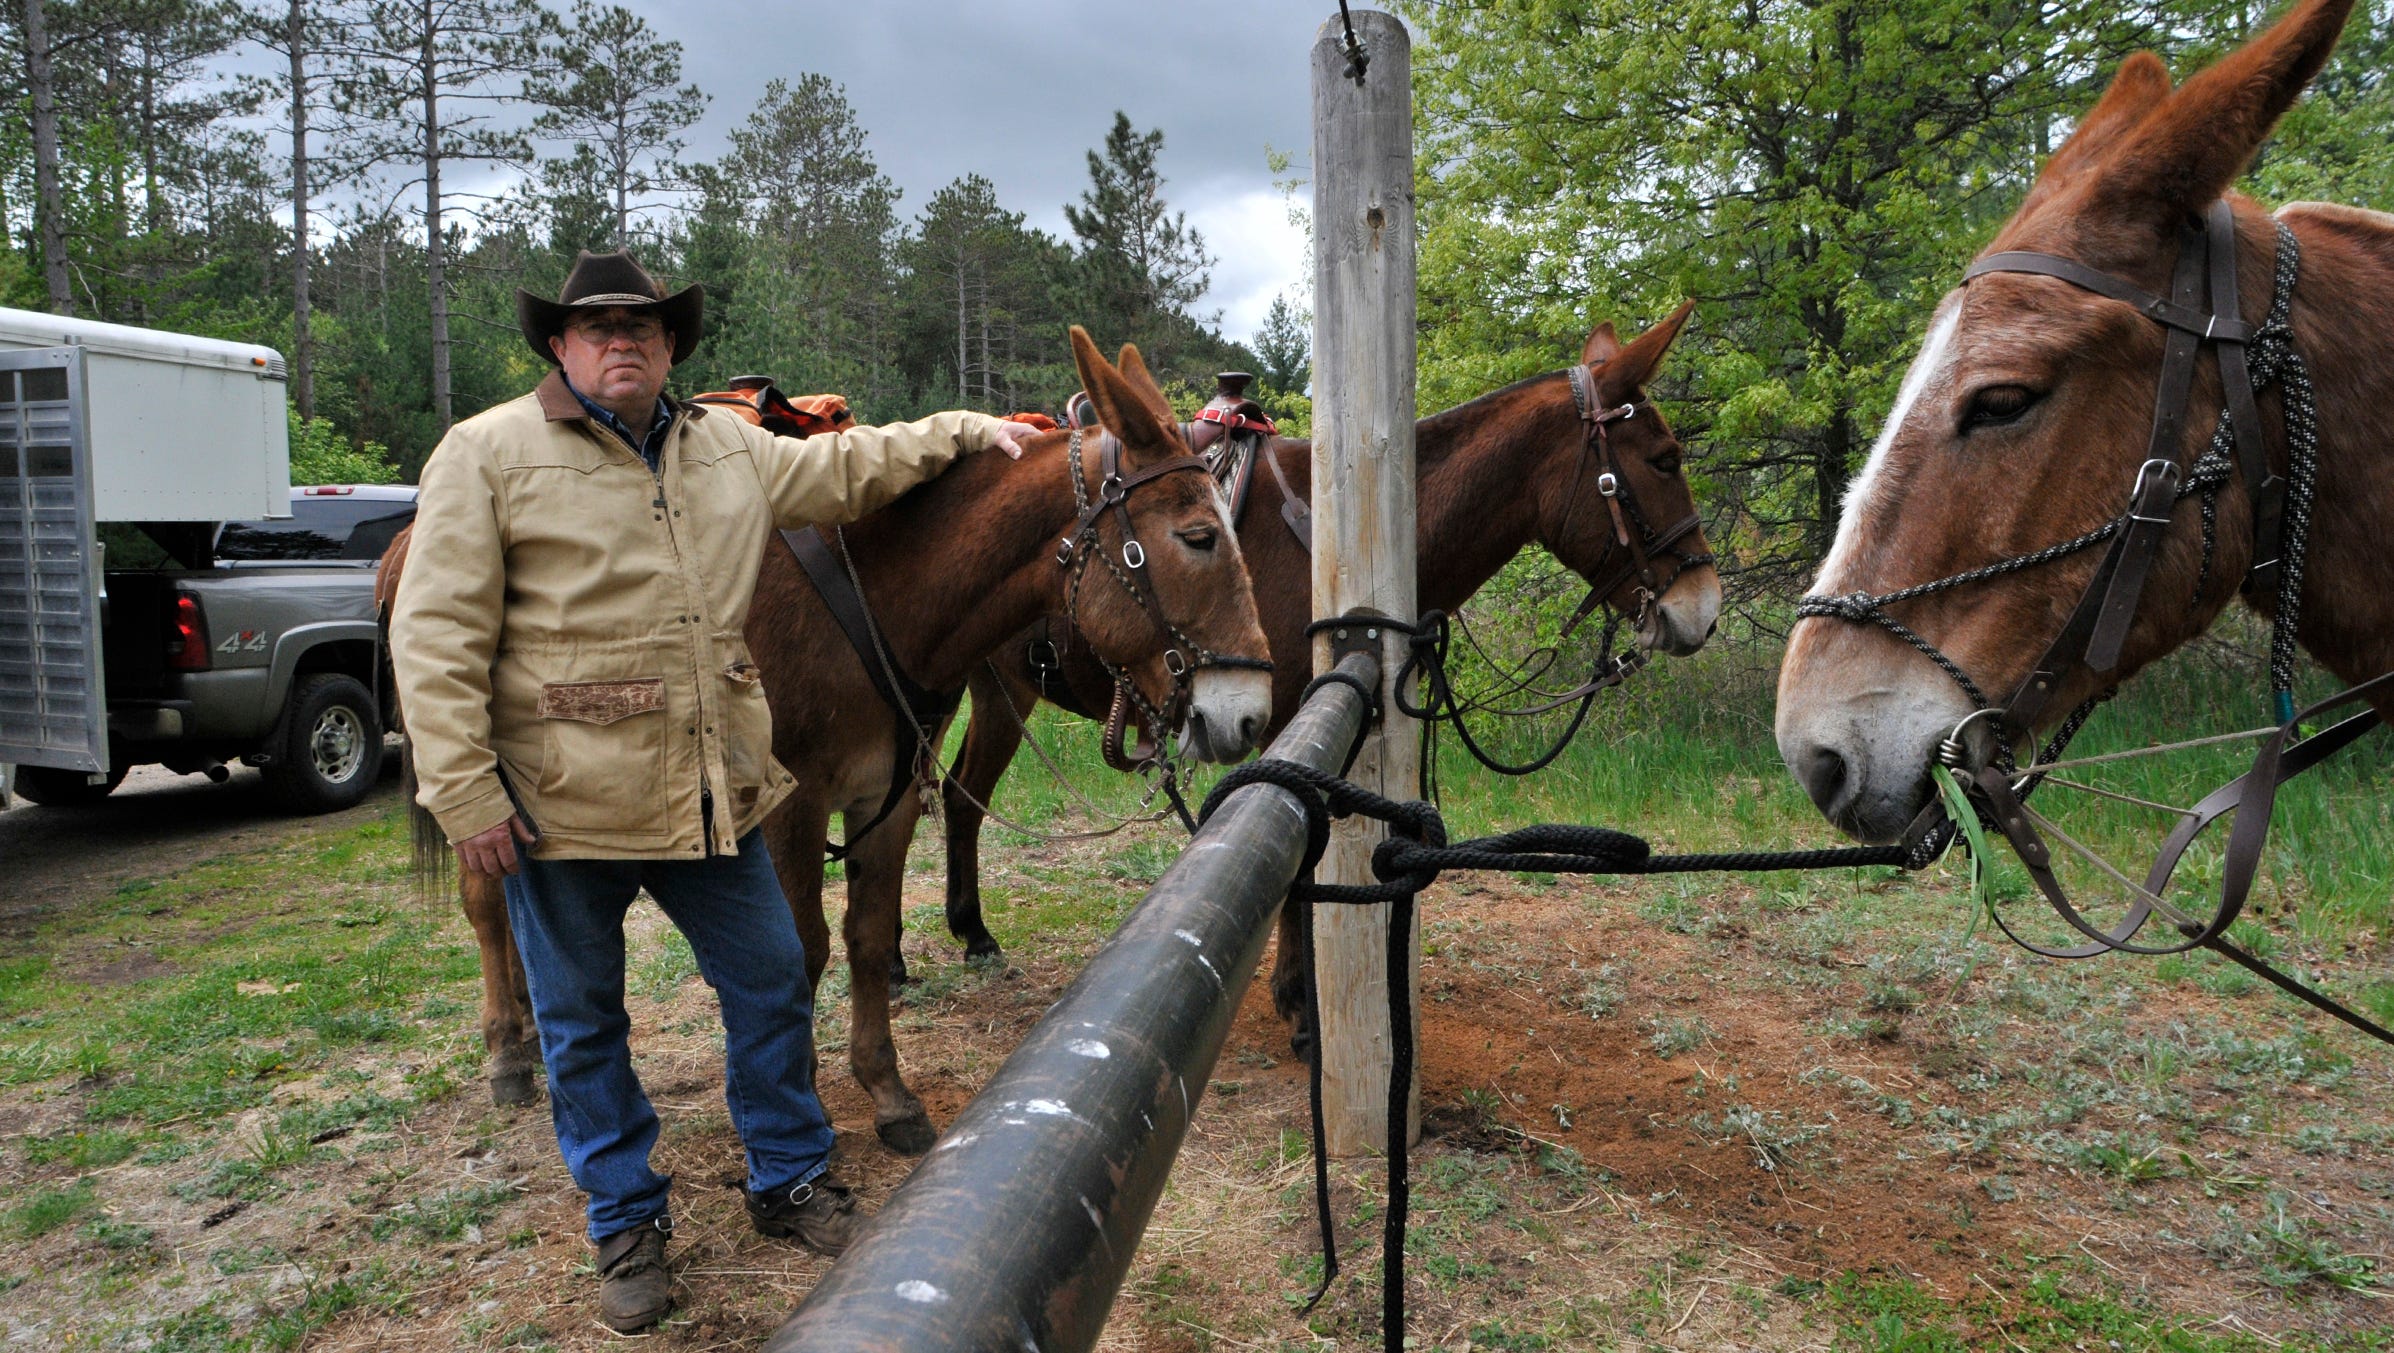 Trail riding with mules: A Minnesota club bucks myths